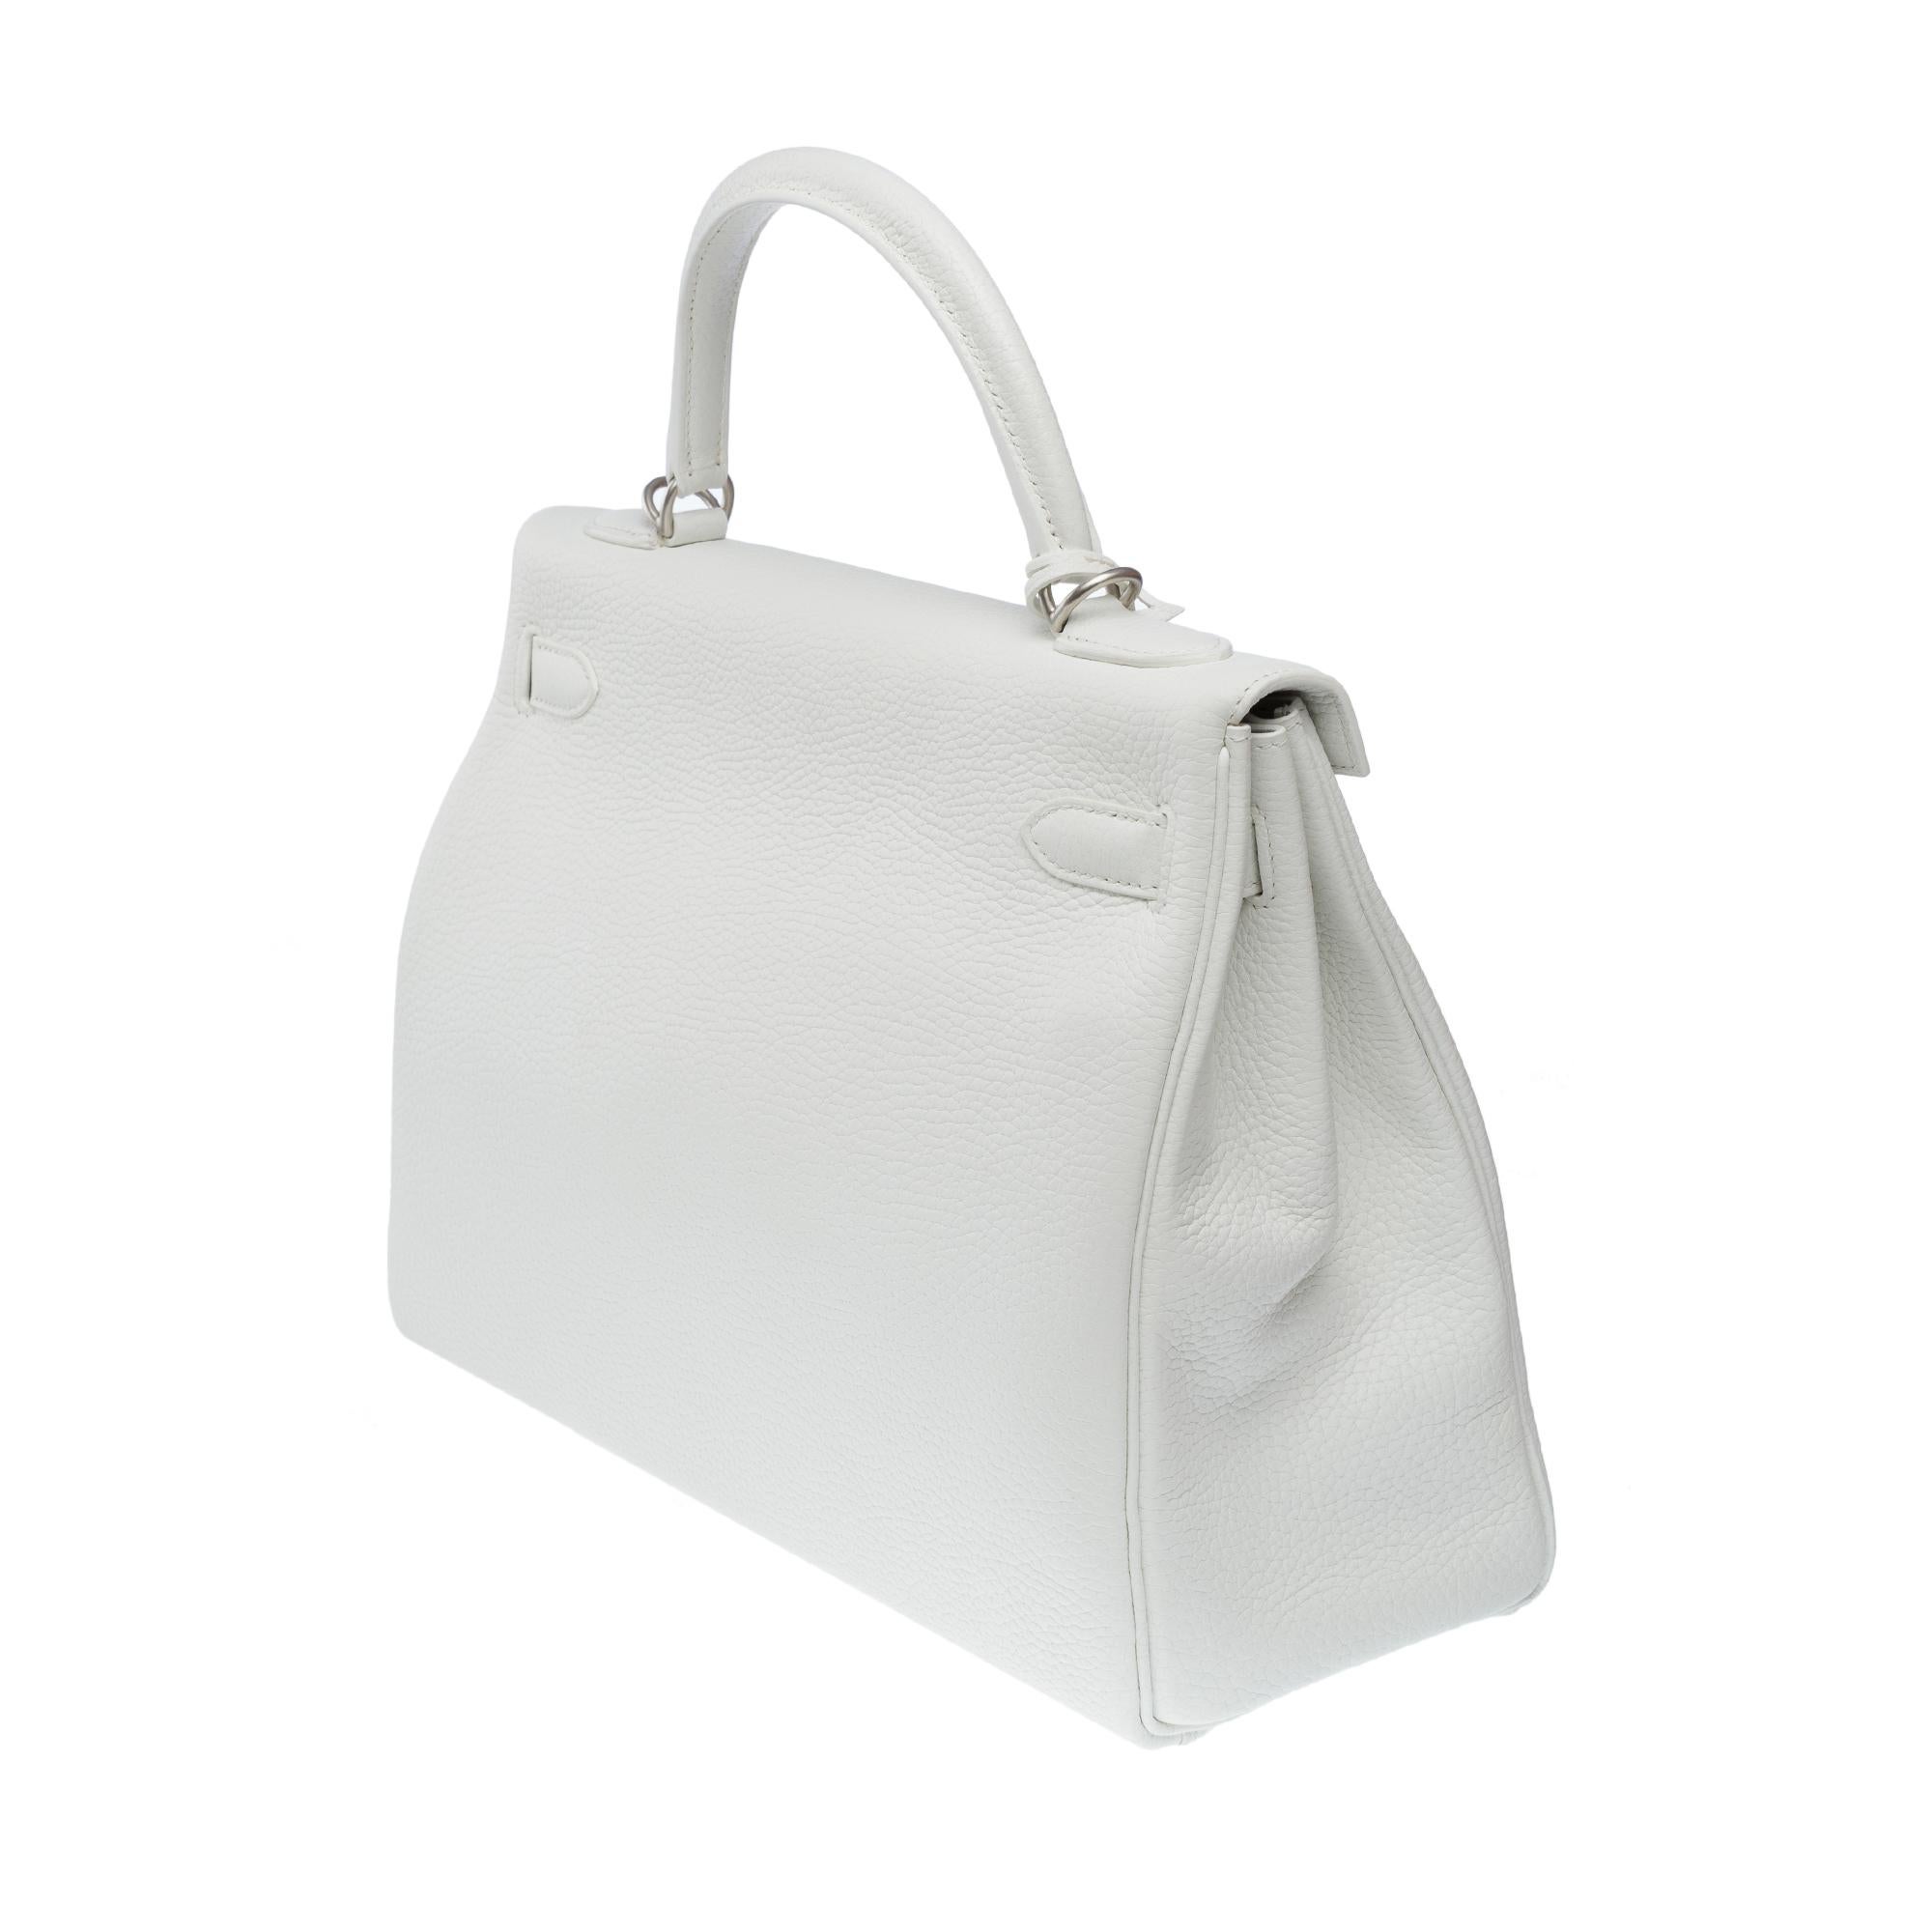 Hermès Kelly 32 handbag strap (HSO) in White & Grey interior leather, BSHW 2